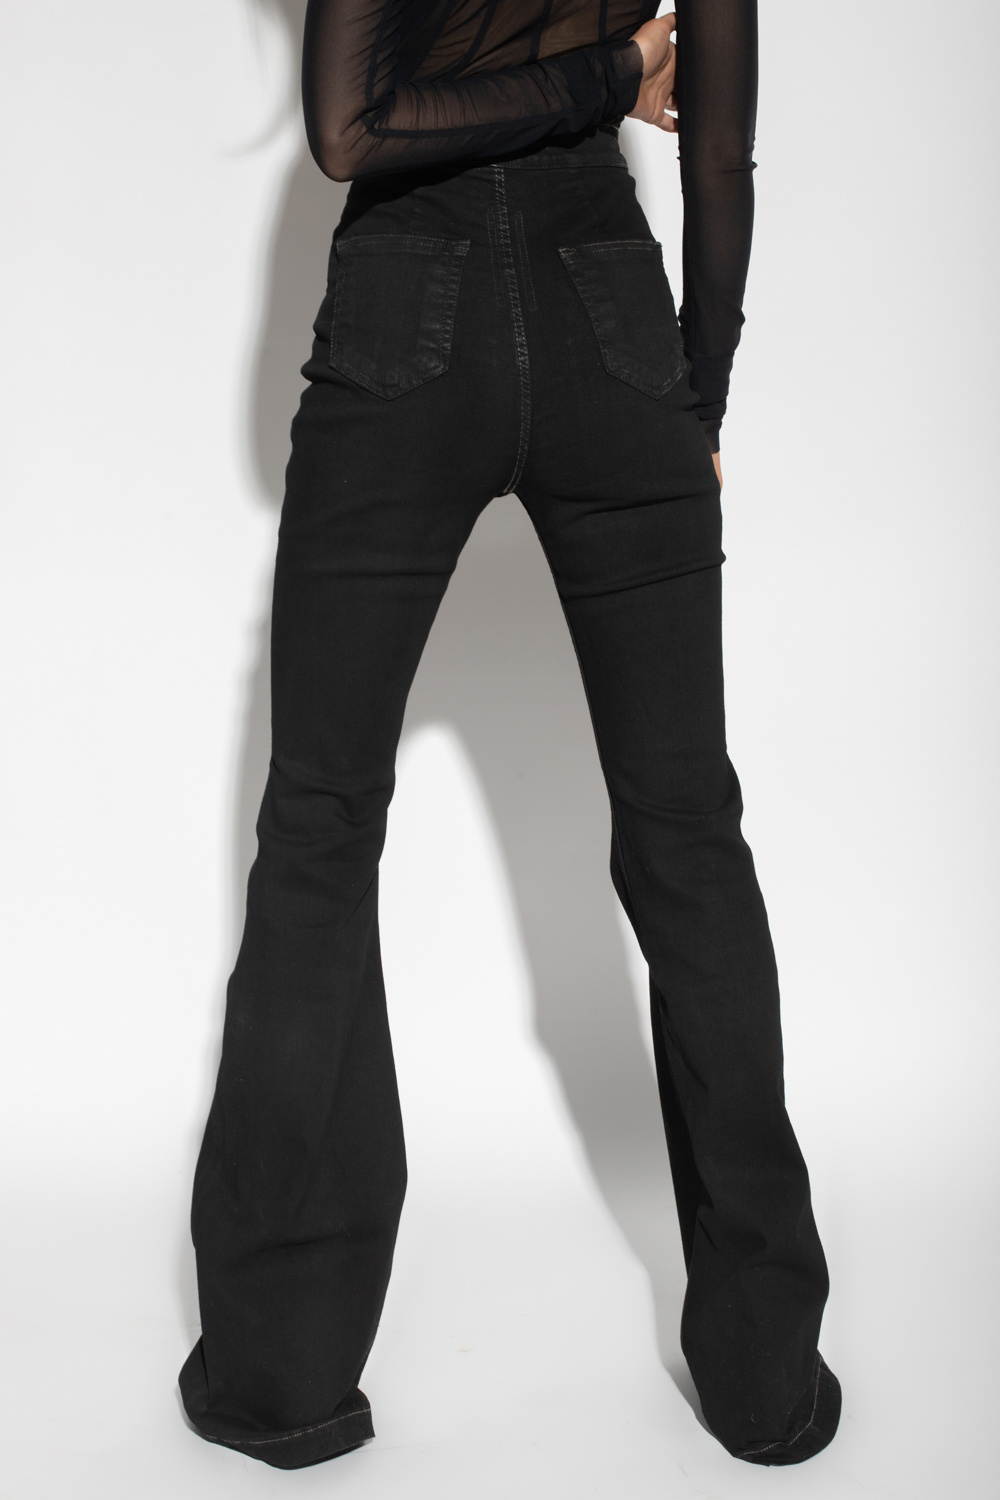 Rick Owens DRKSHDW ‘Bolan’ bootcut jeans